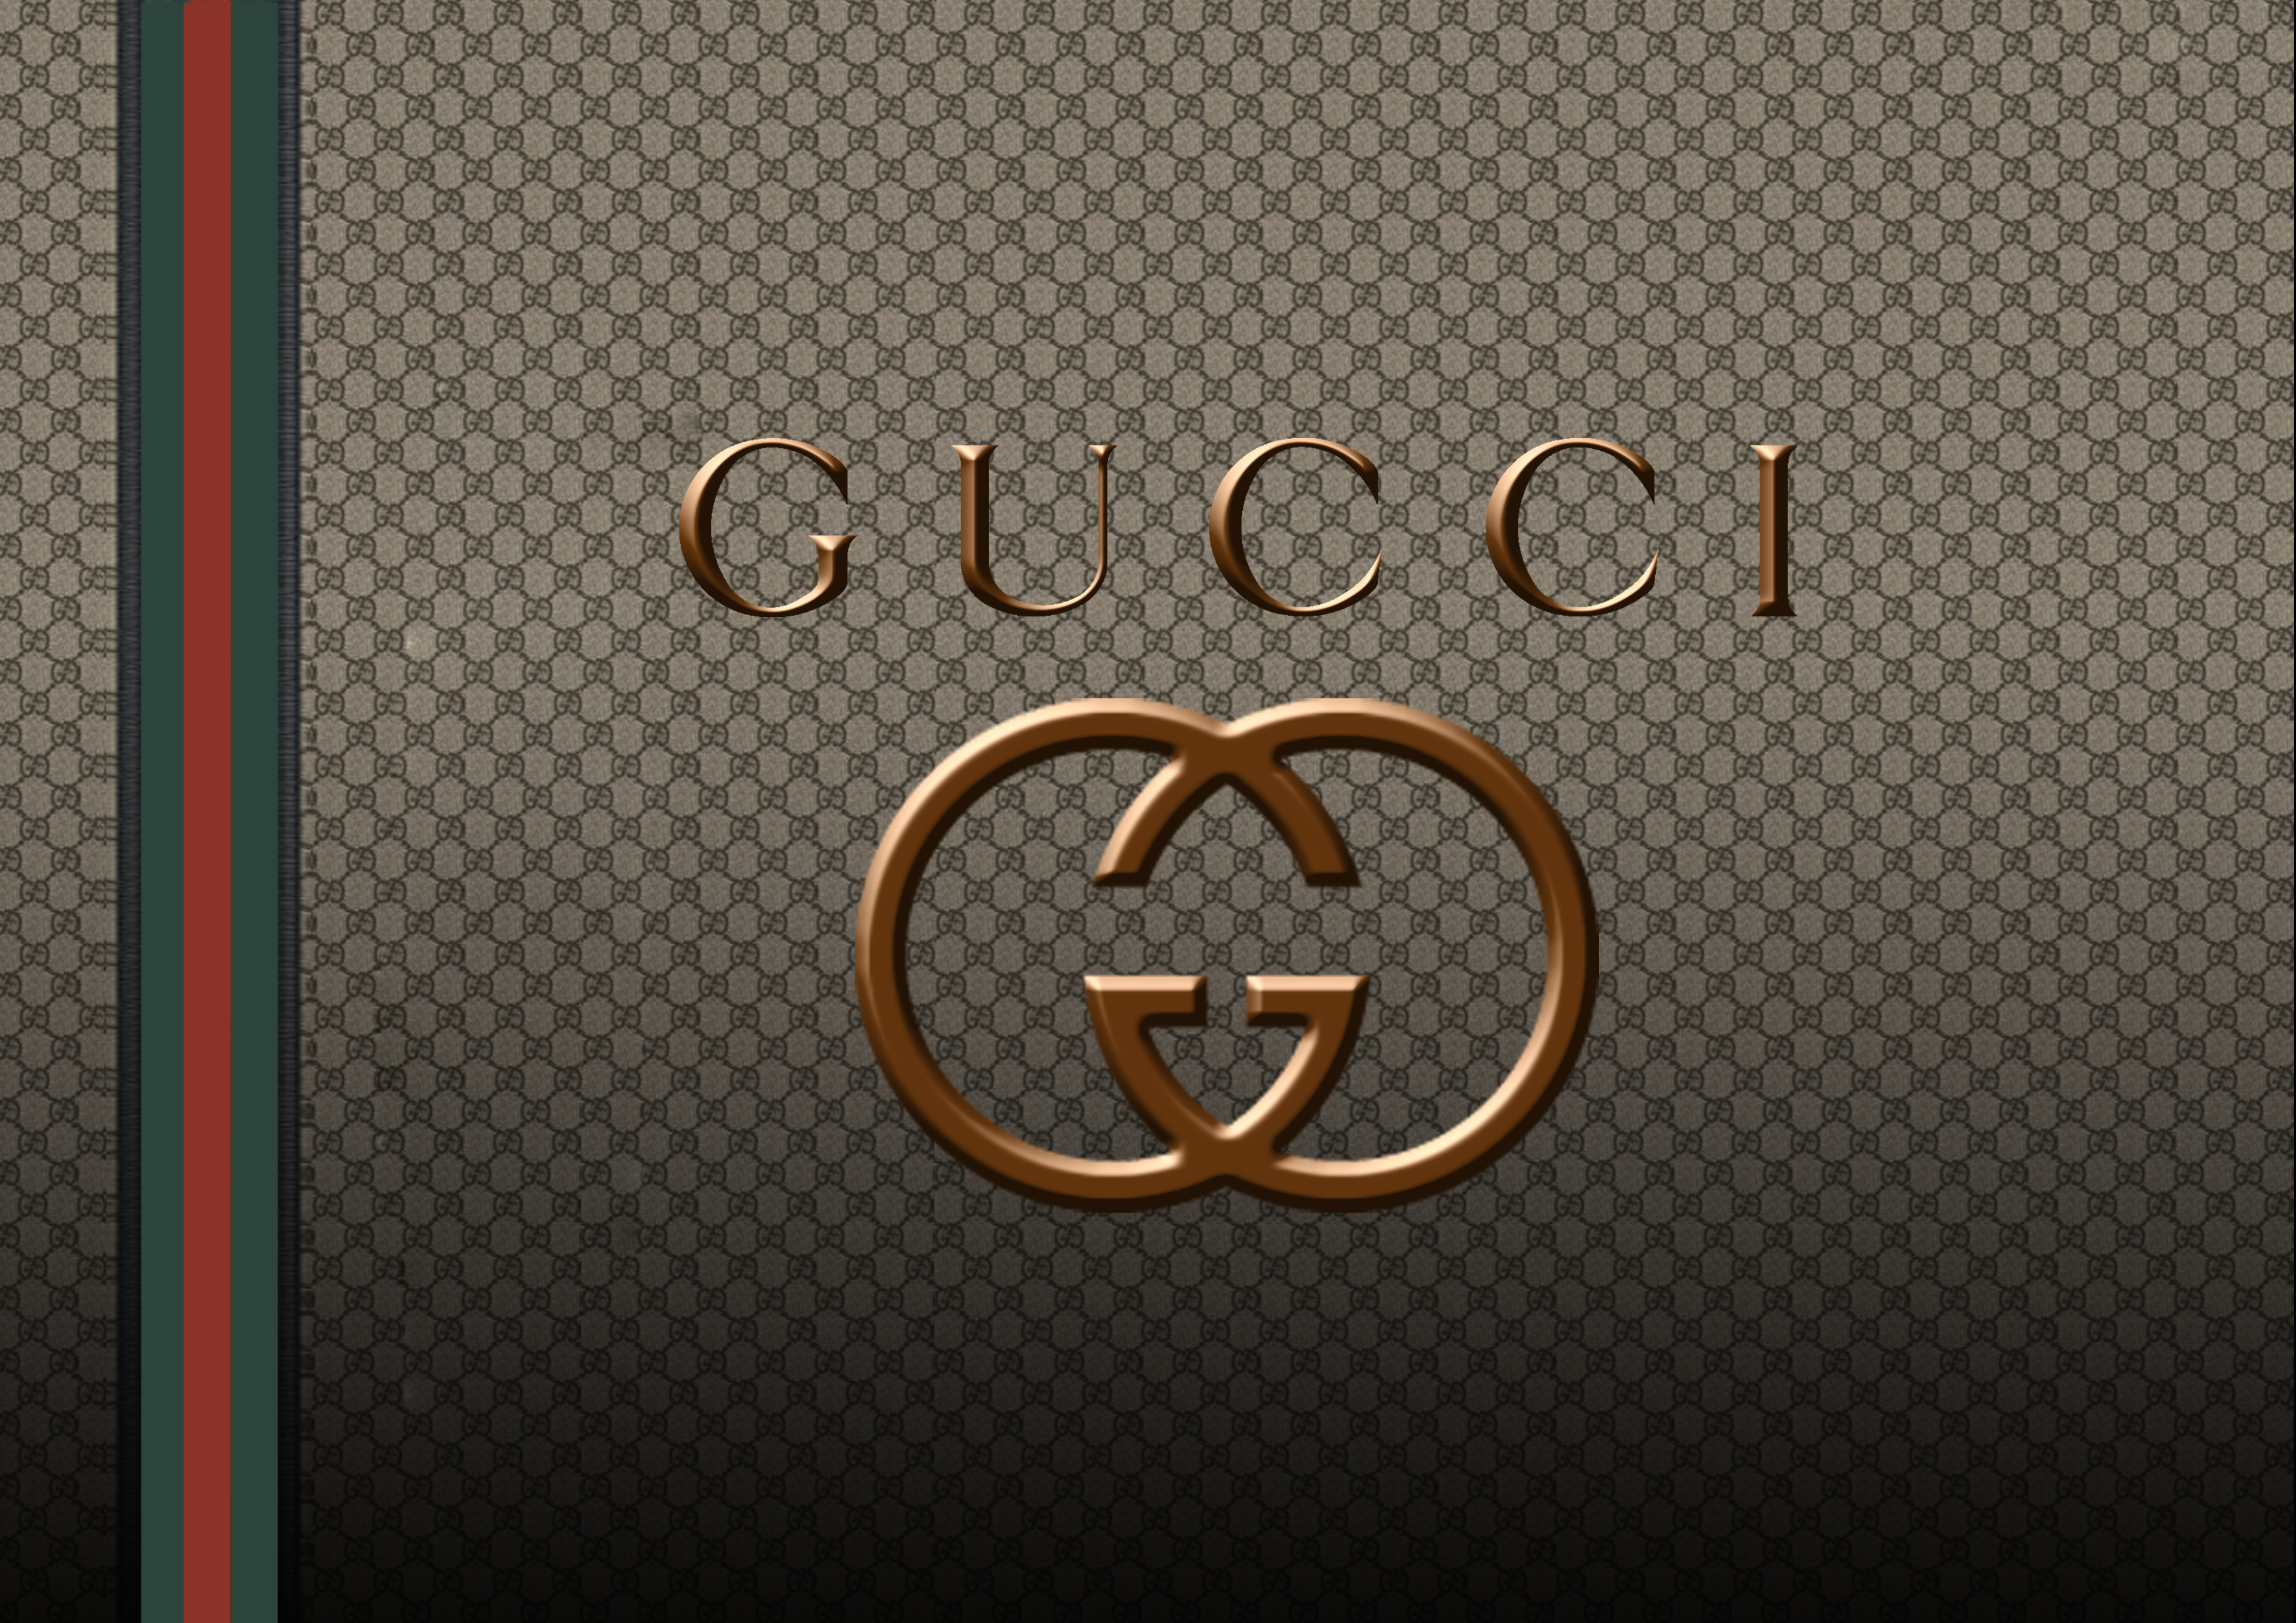 50 Gucci Wallpaper On Wallpapersafari